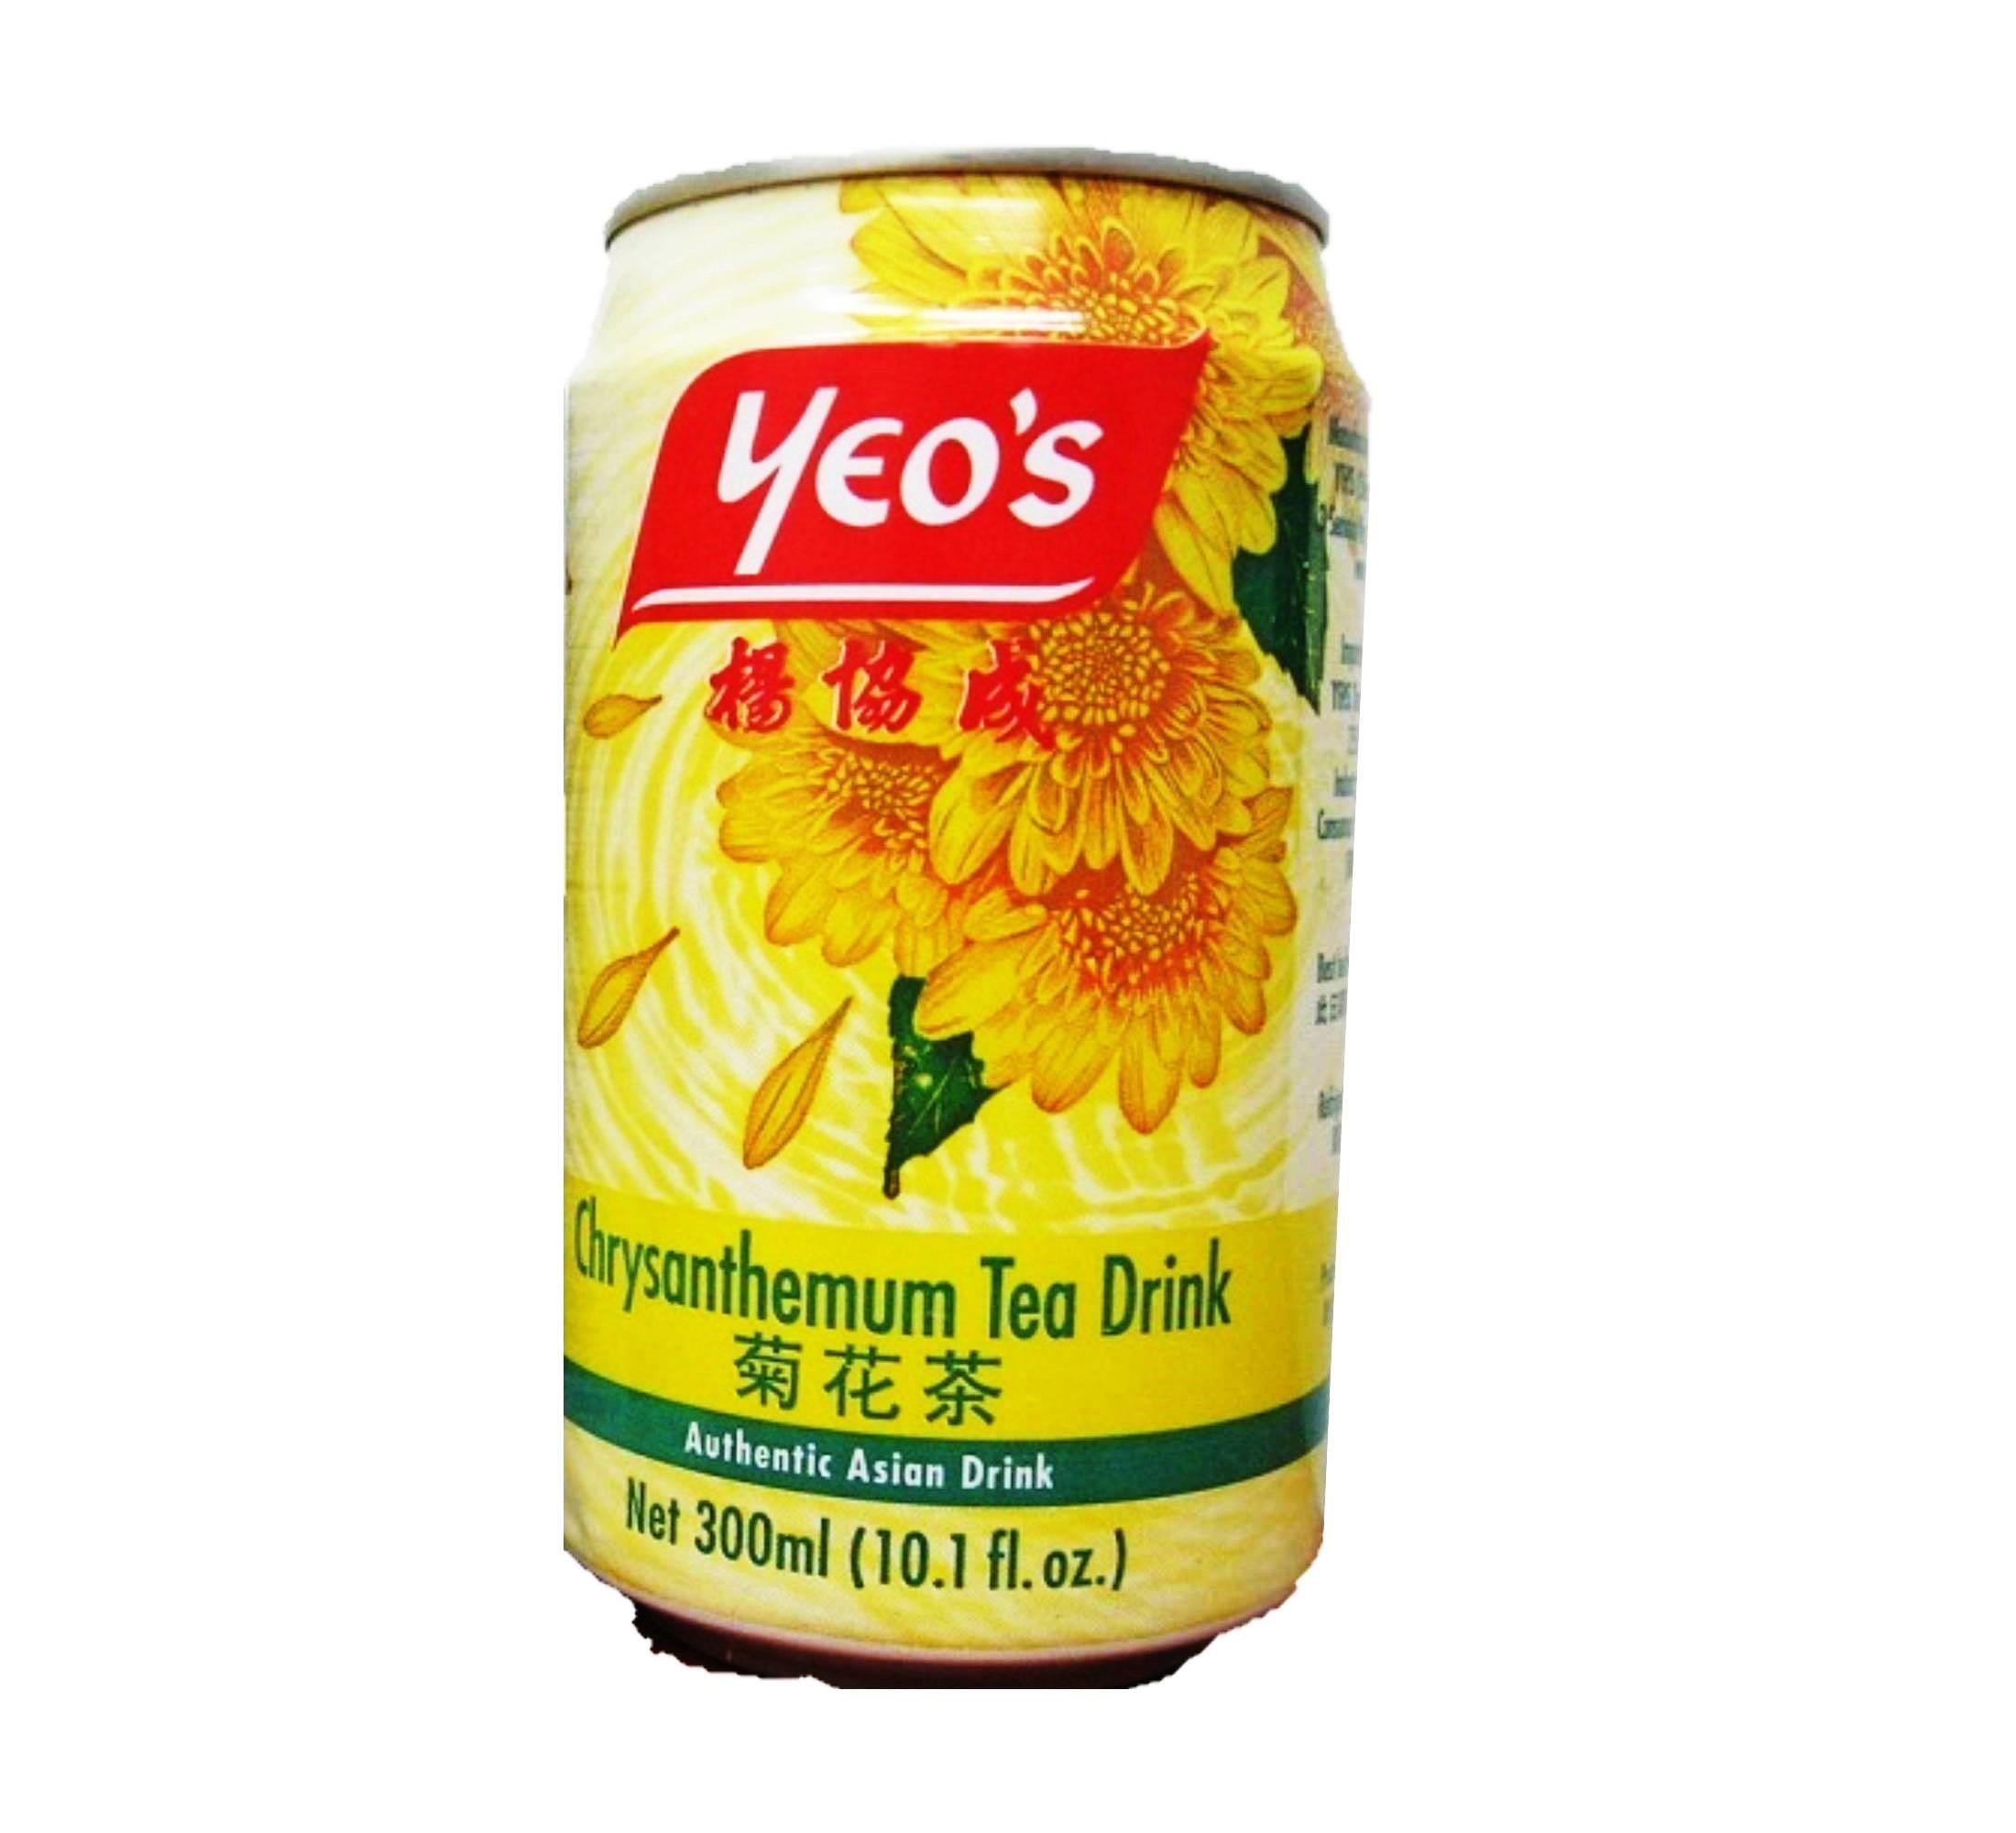 YEO'S CHRYSANTHEMUM TEA DRINK DR310020